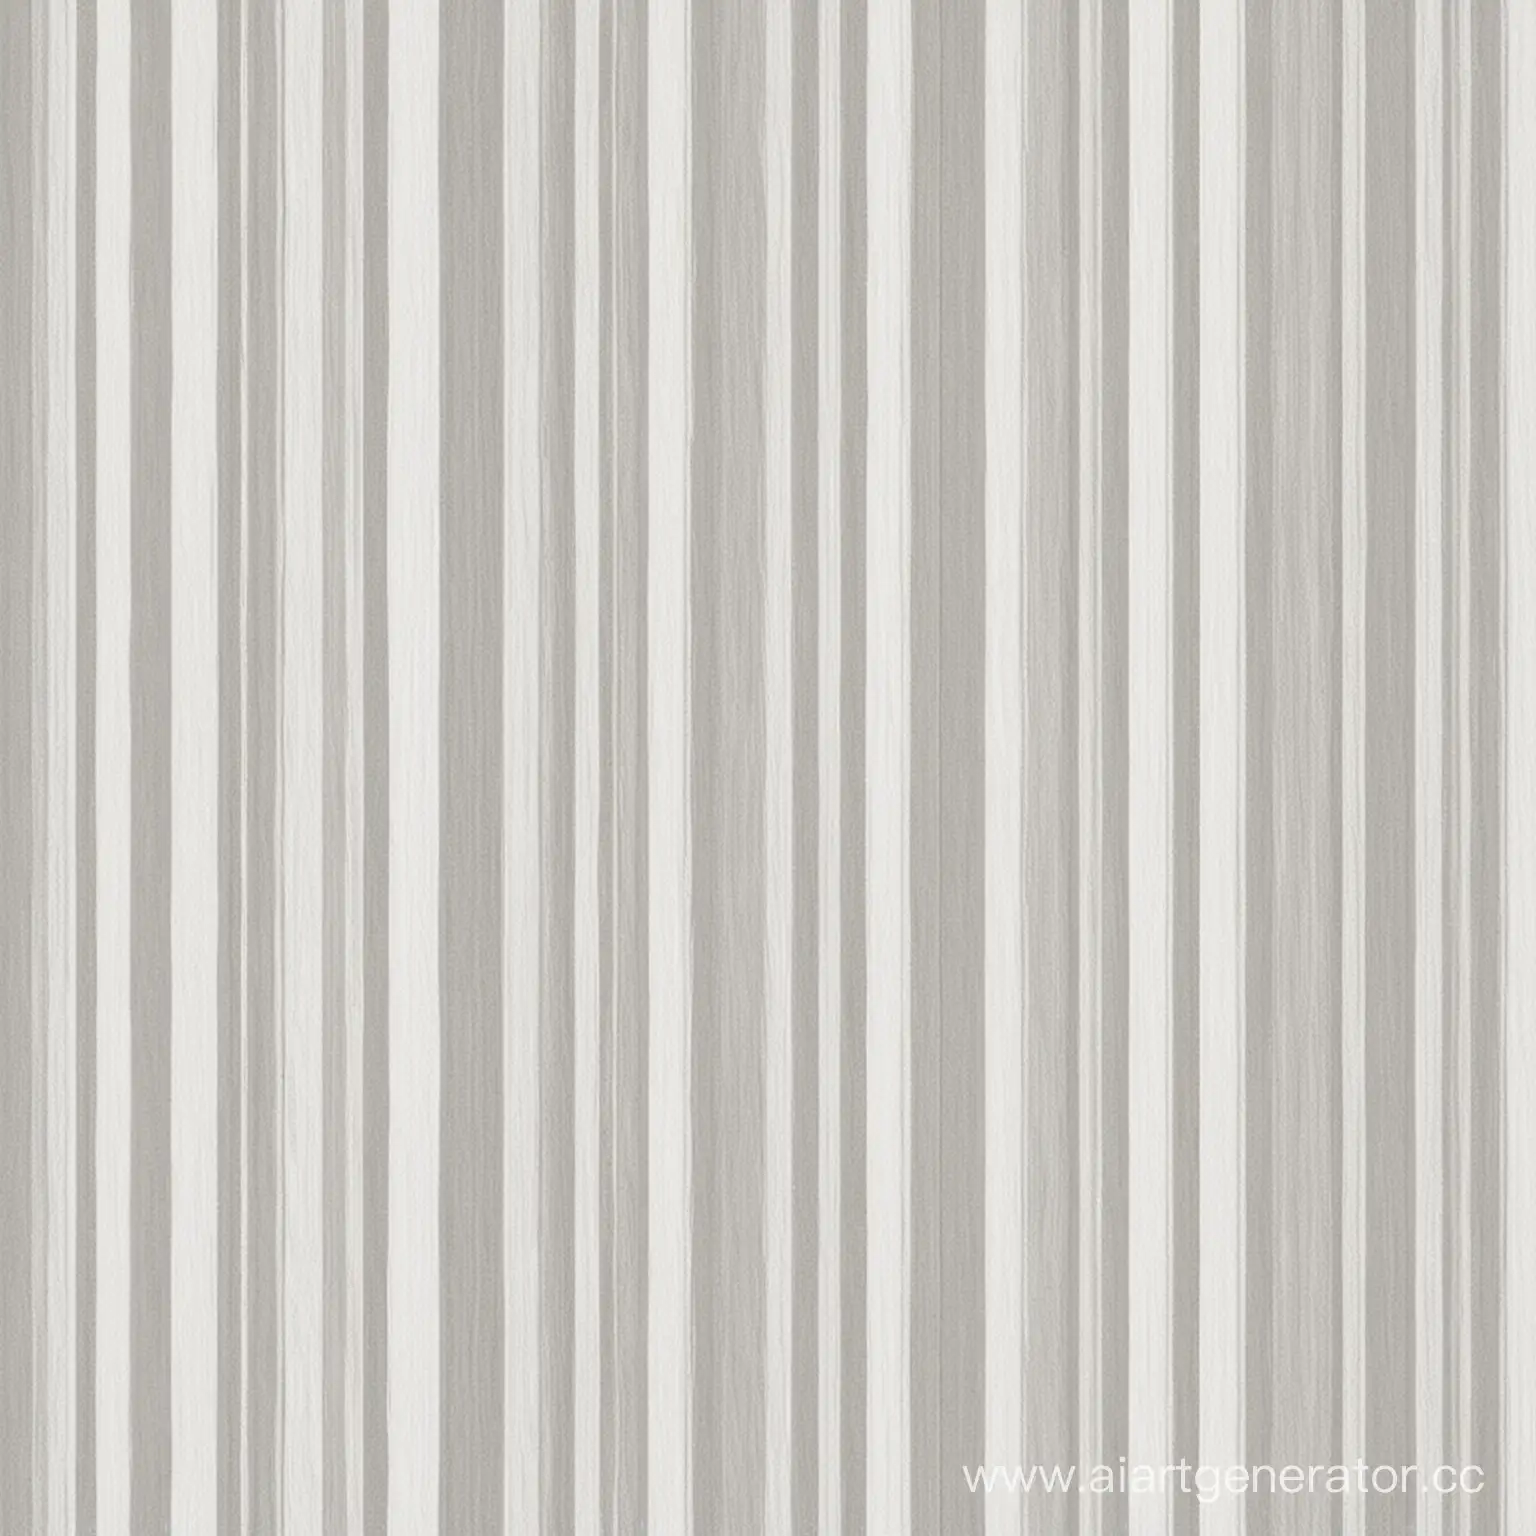 Minimalist-Gray-Vertical-Stripes-Artwork-on-White-Background